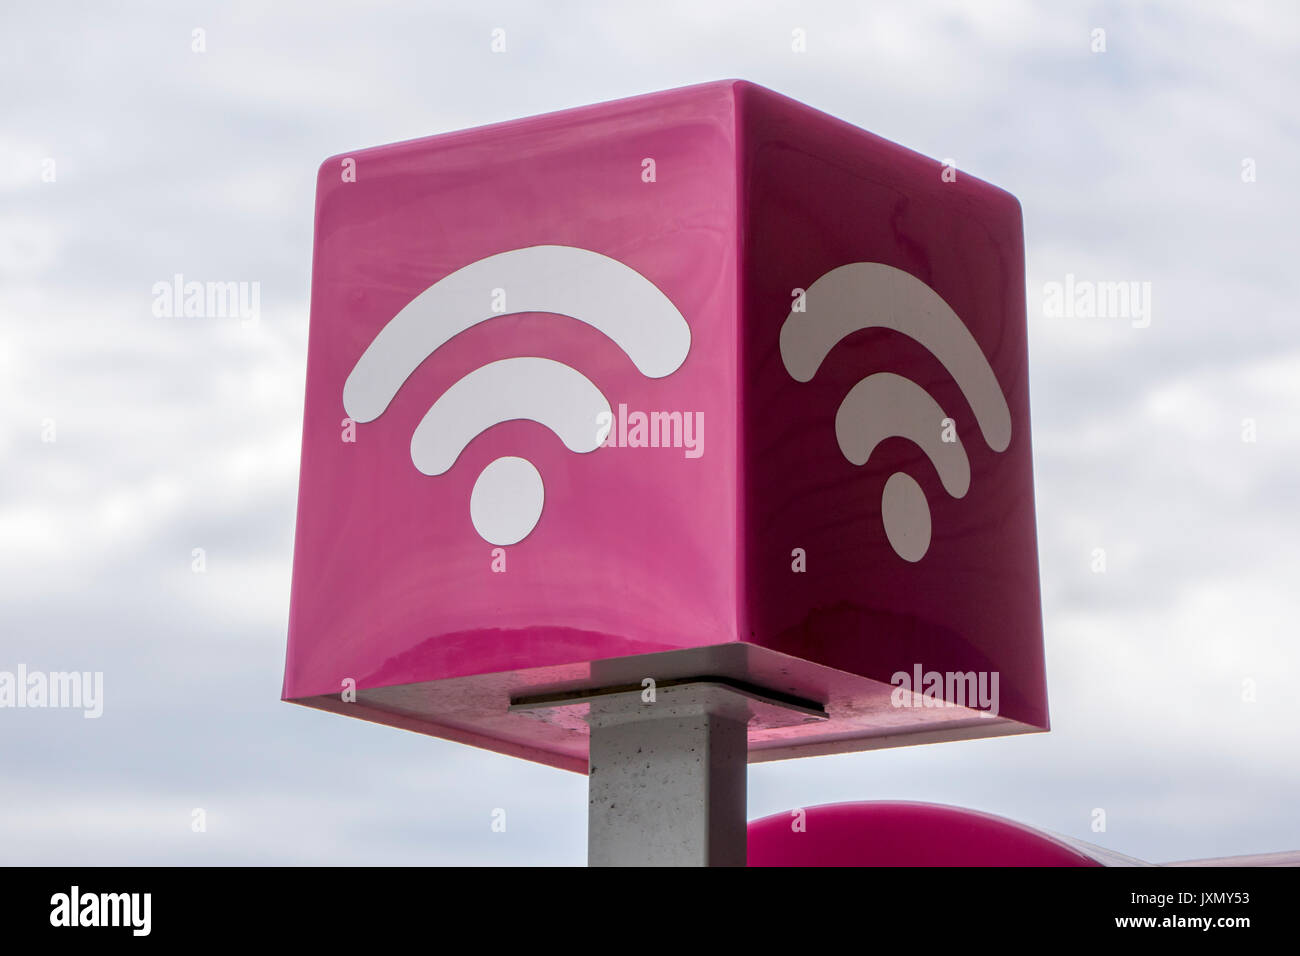 A WiFi Hotspot Sign On A Telstra Payhone Booth In Burnie Tasmania Australia Stock Photo